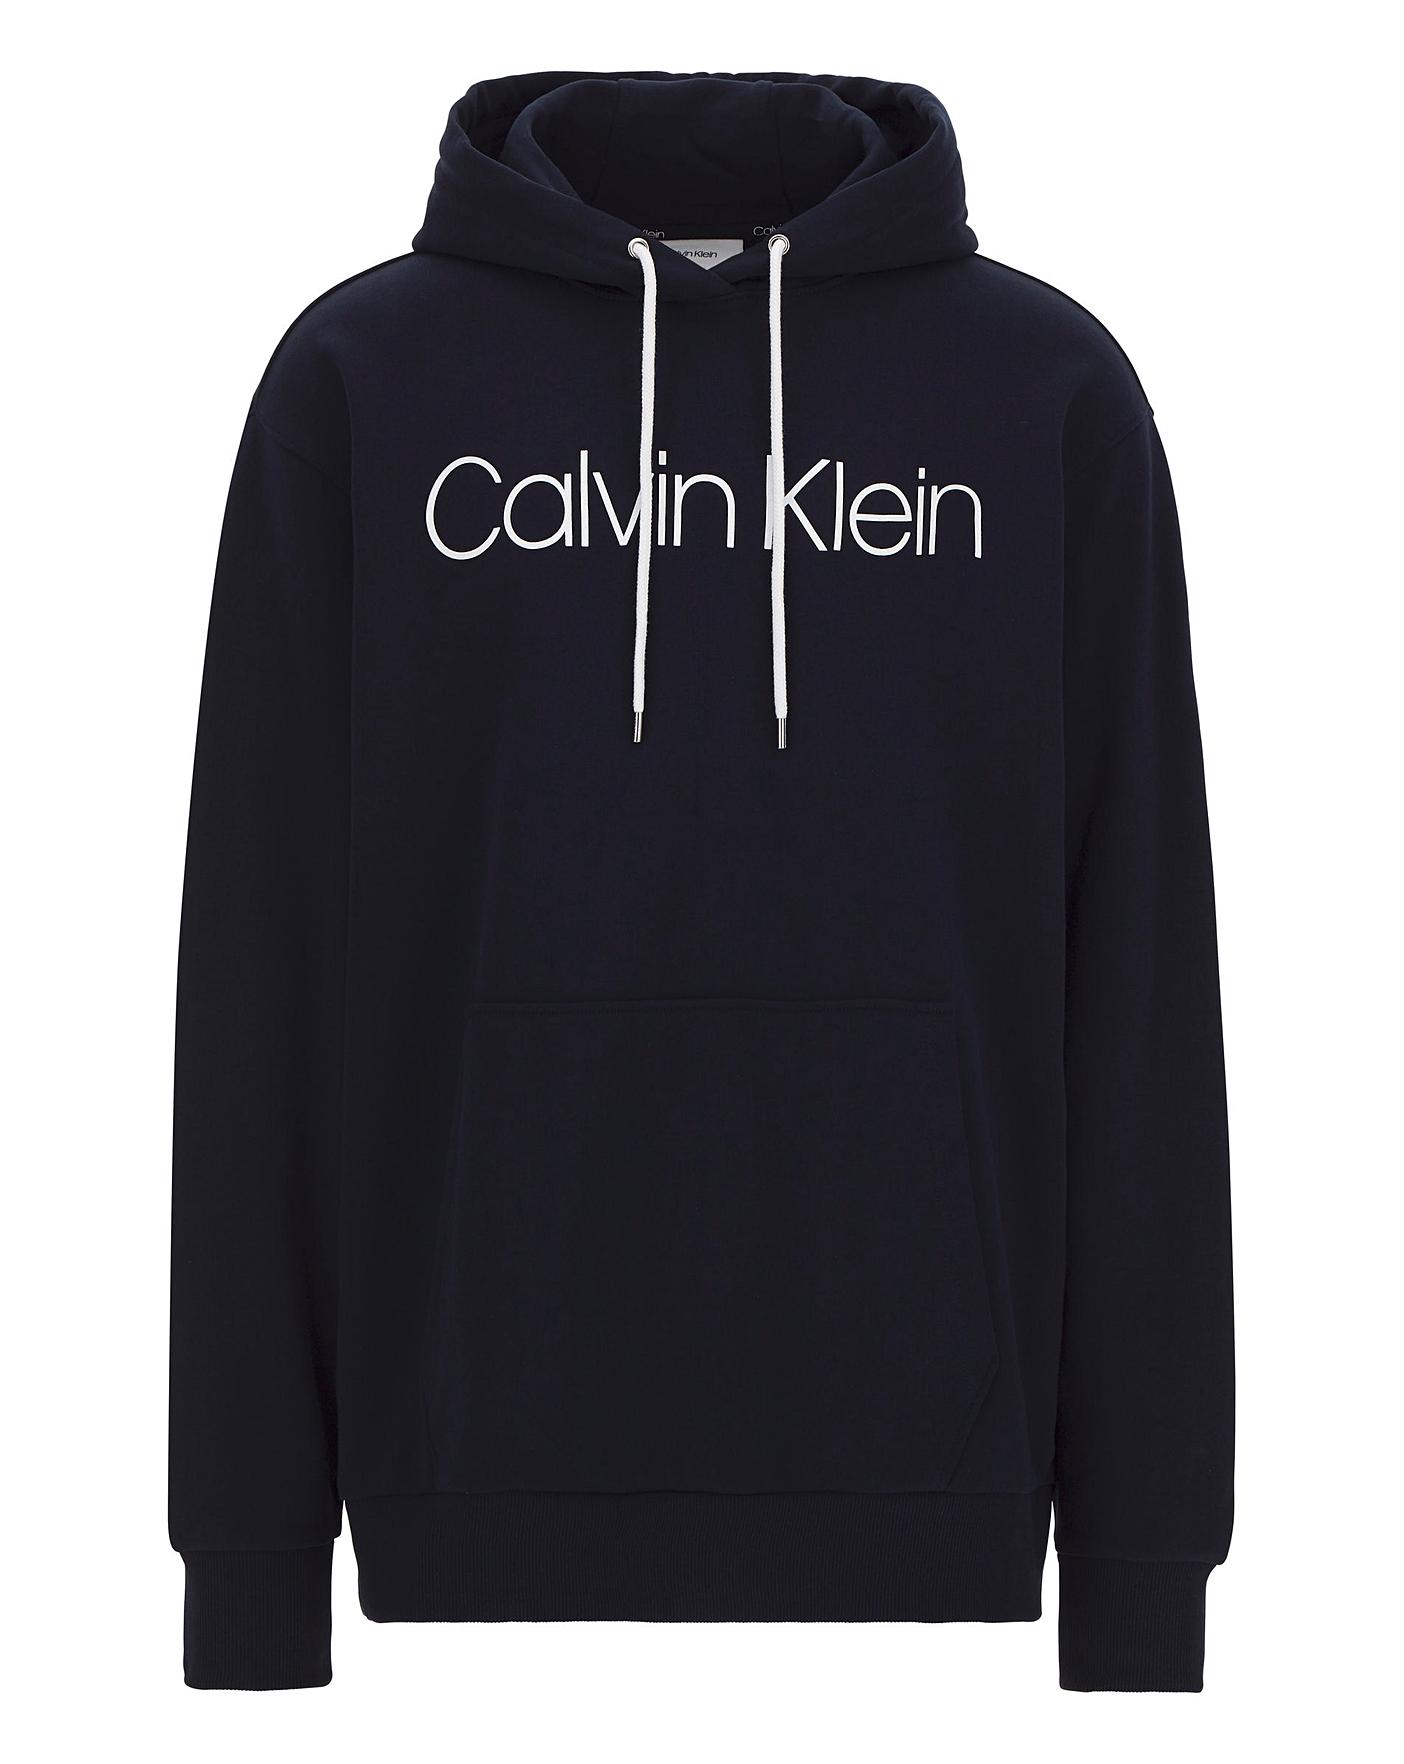 calvin klein navy hoodie